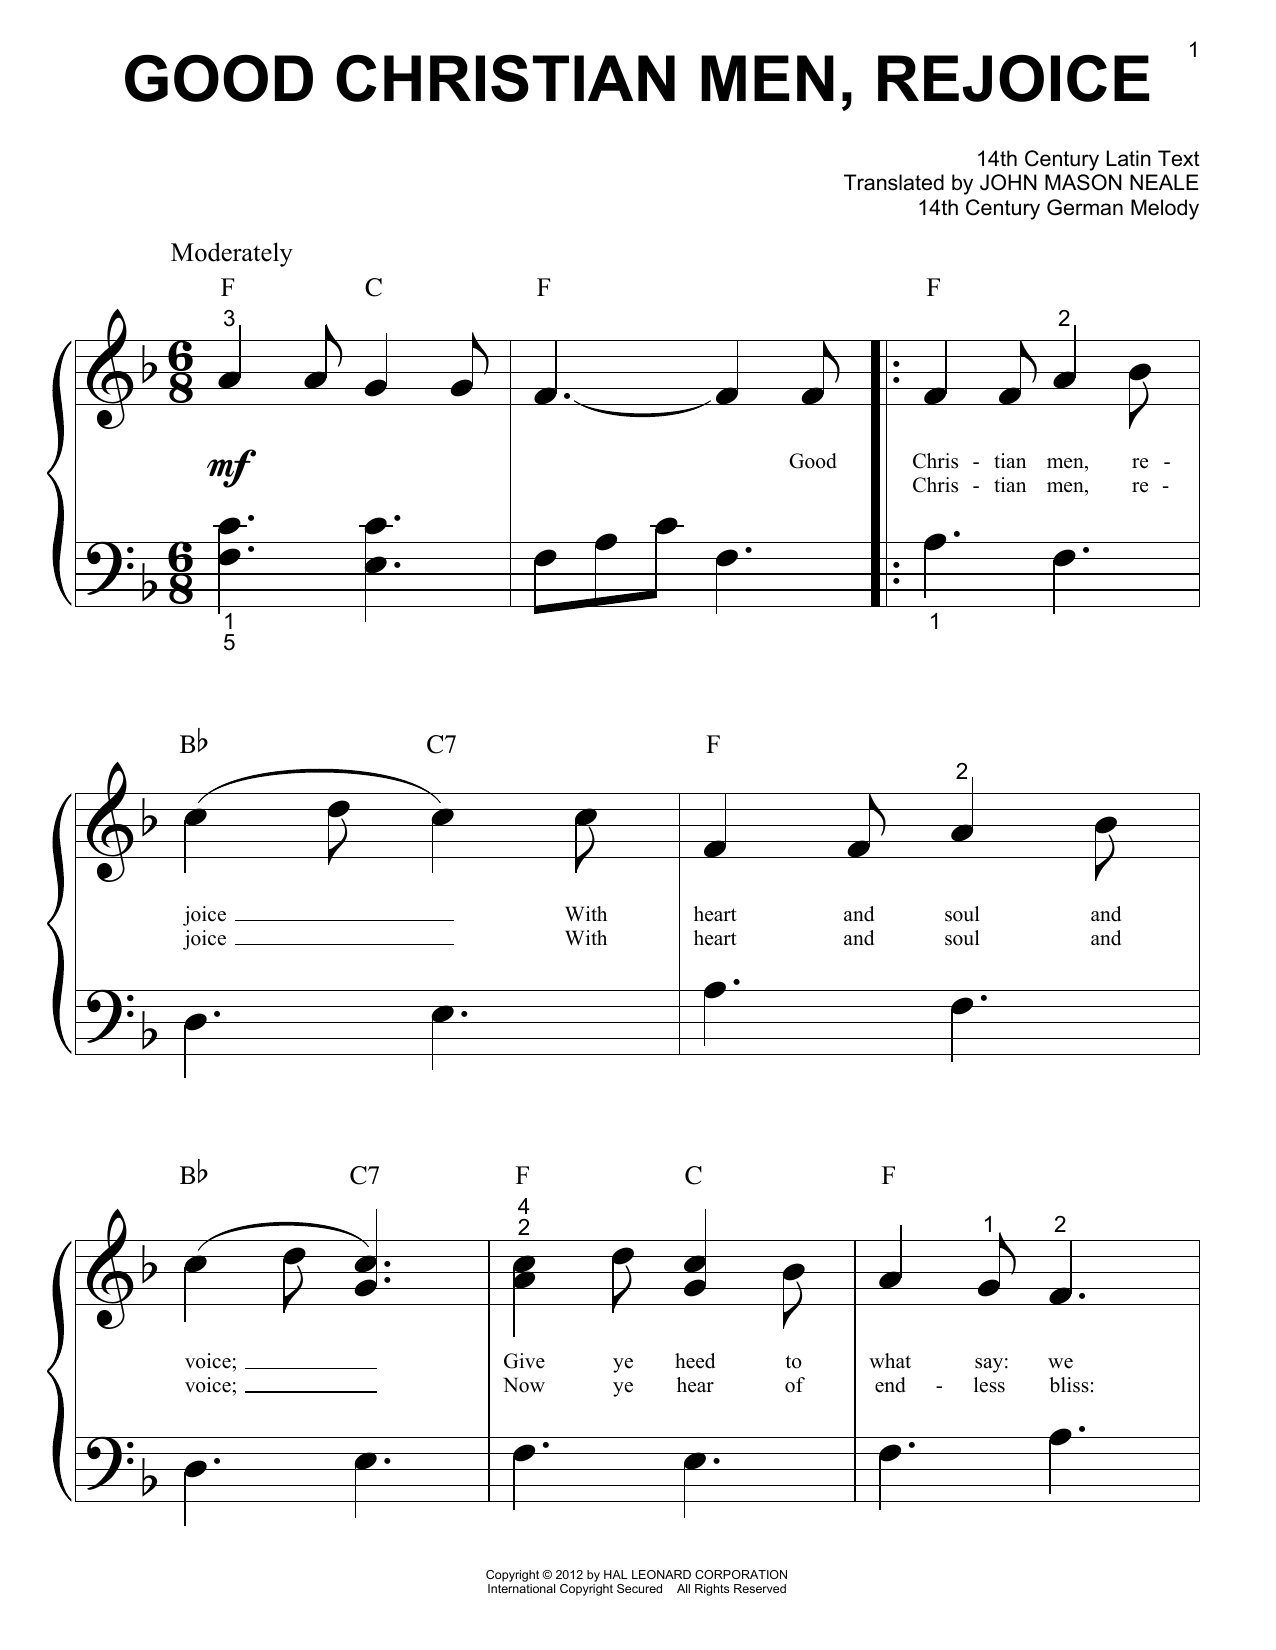 Christmas Carol Good Christian Men, Rejoice Sheet Music Notes & Chords for Guitar Lead Sheet - Download or Print PDF